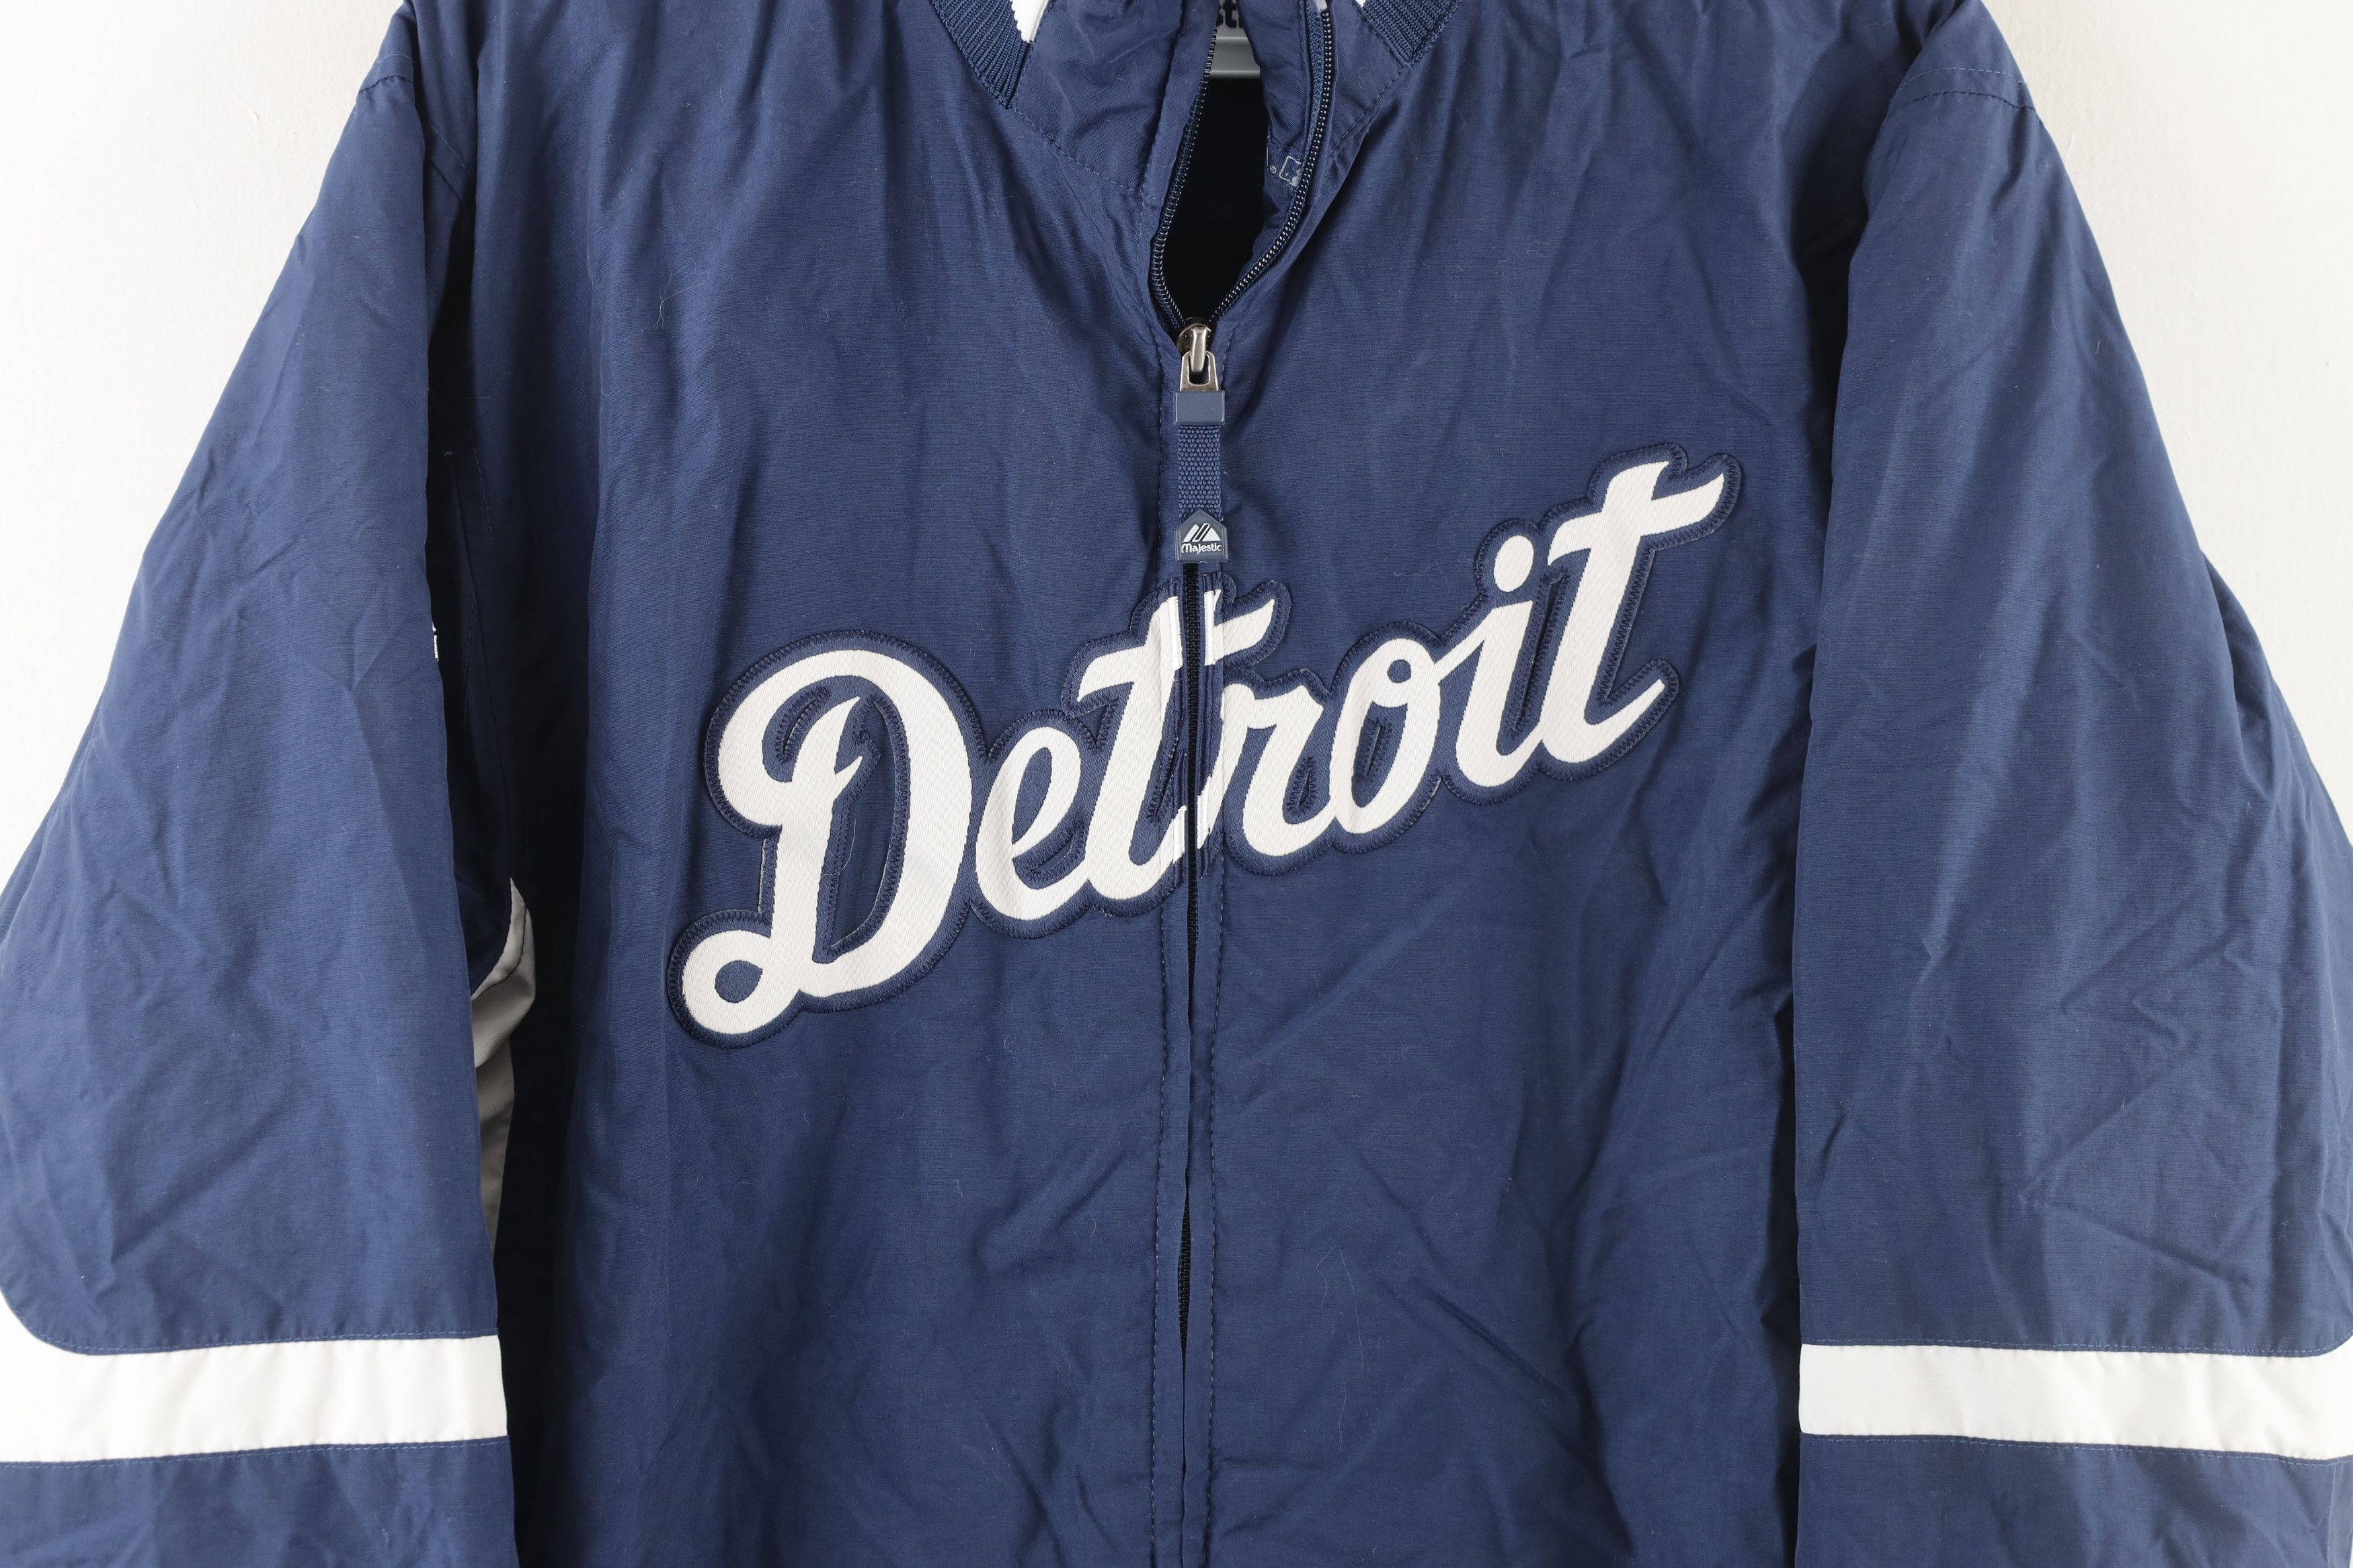 Vintage Vintage Majestic Detroit Tigers Out Insulated Bomber Jacket Size US S / EU 44-46 / 1 - 4 Thumbnail